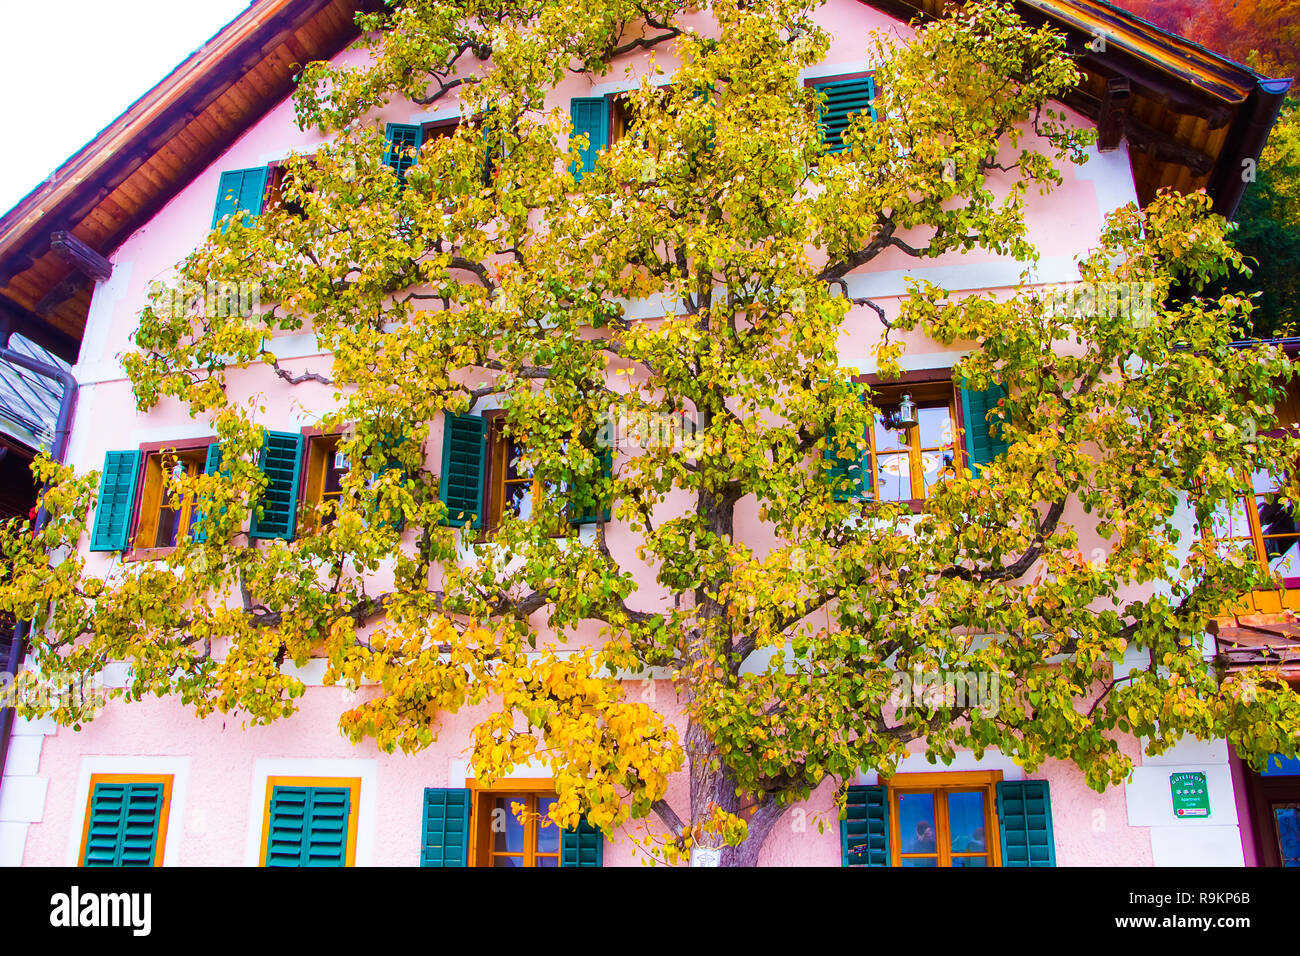 Hedera, ground-creeping woody plant on house facade, Hallstatt in Austria Stock Photo